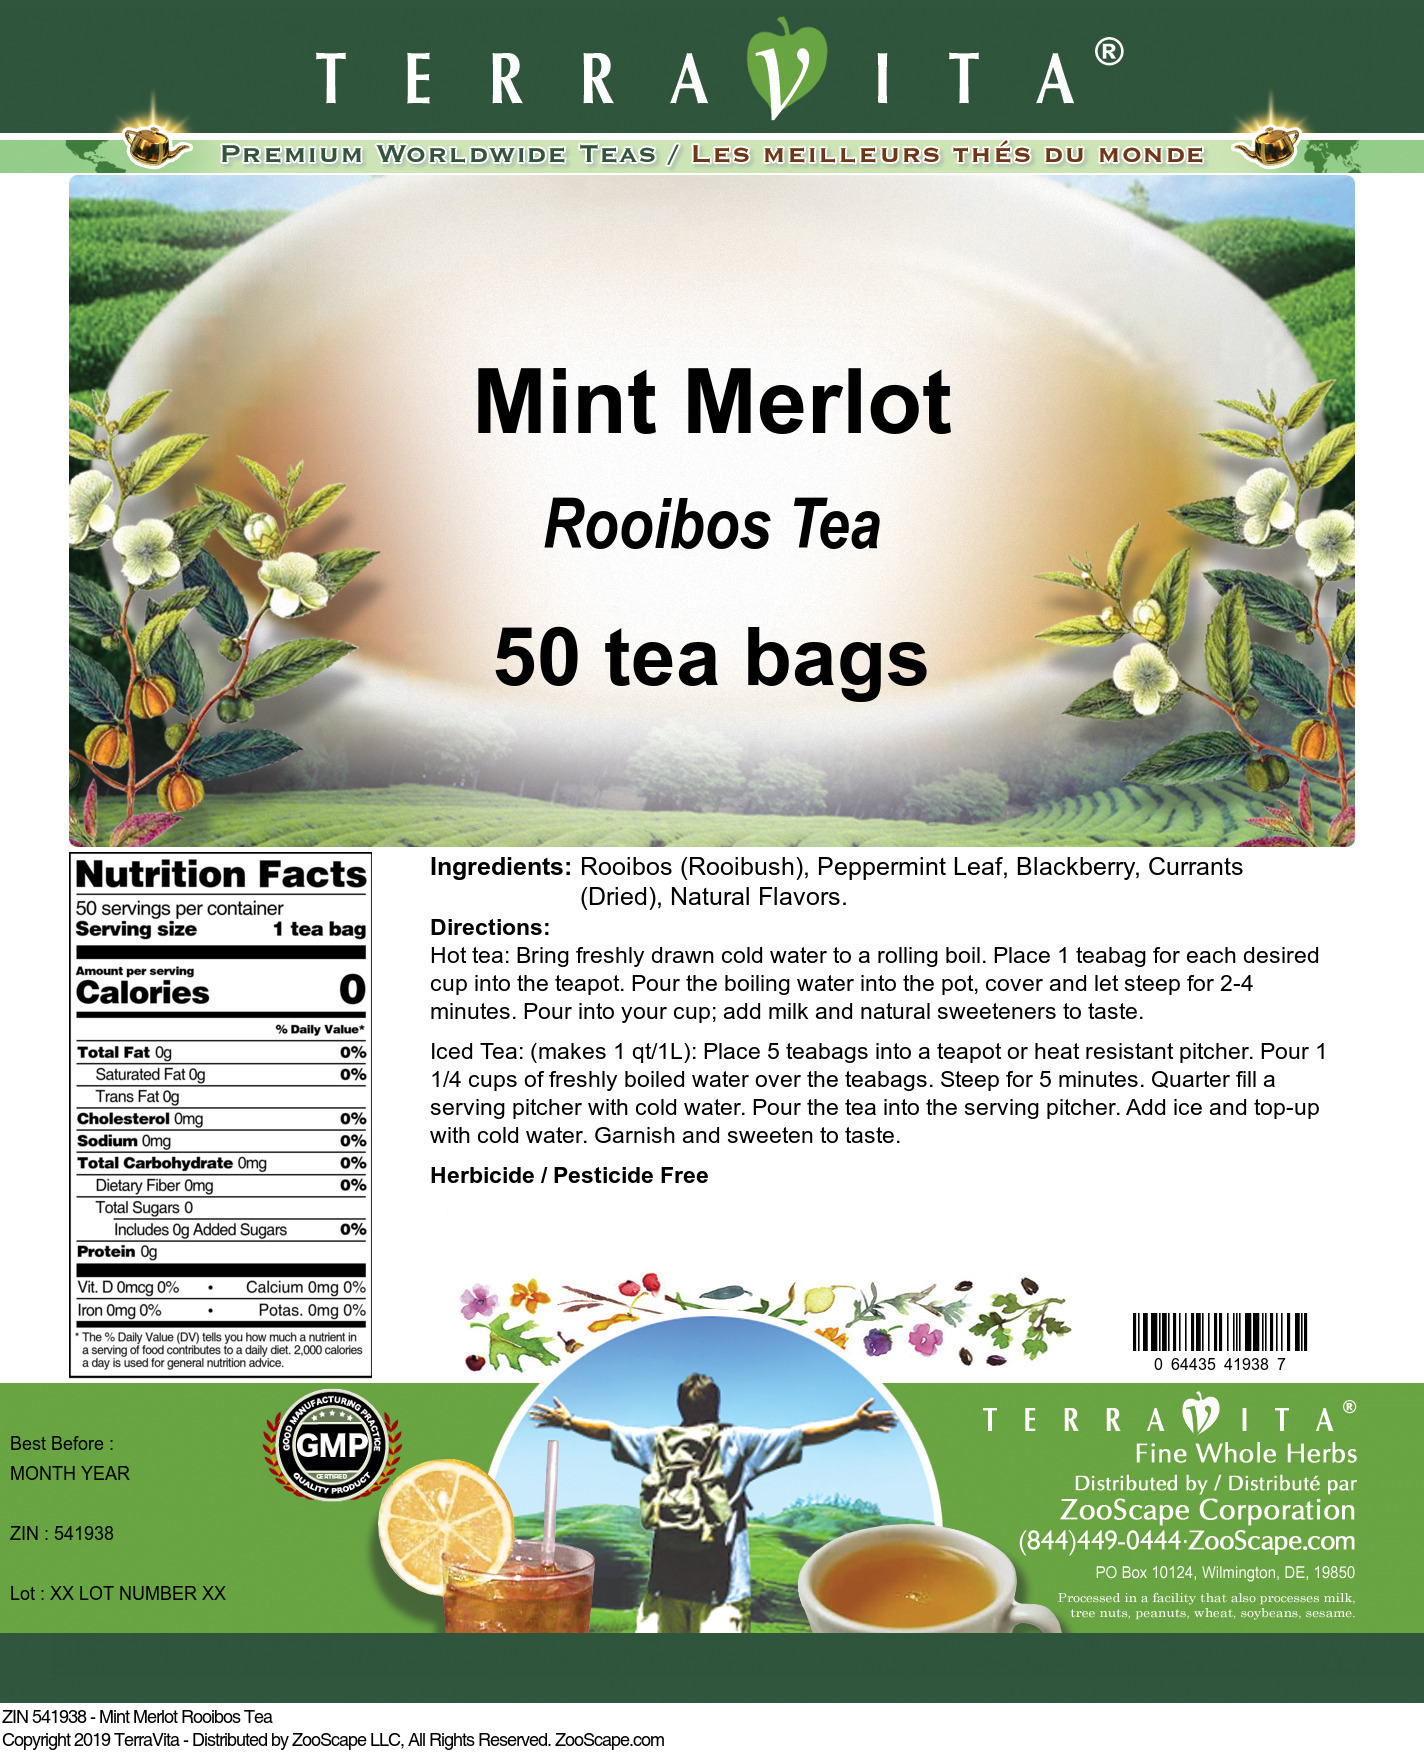 Mint Merlot Rooibos Tea - Label